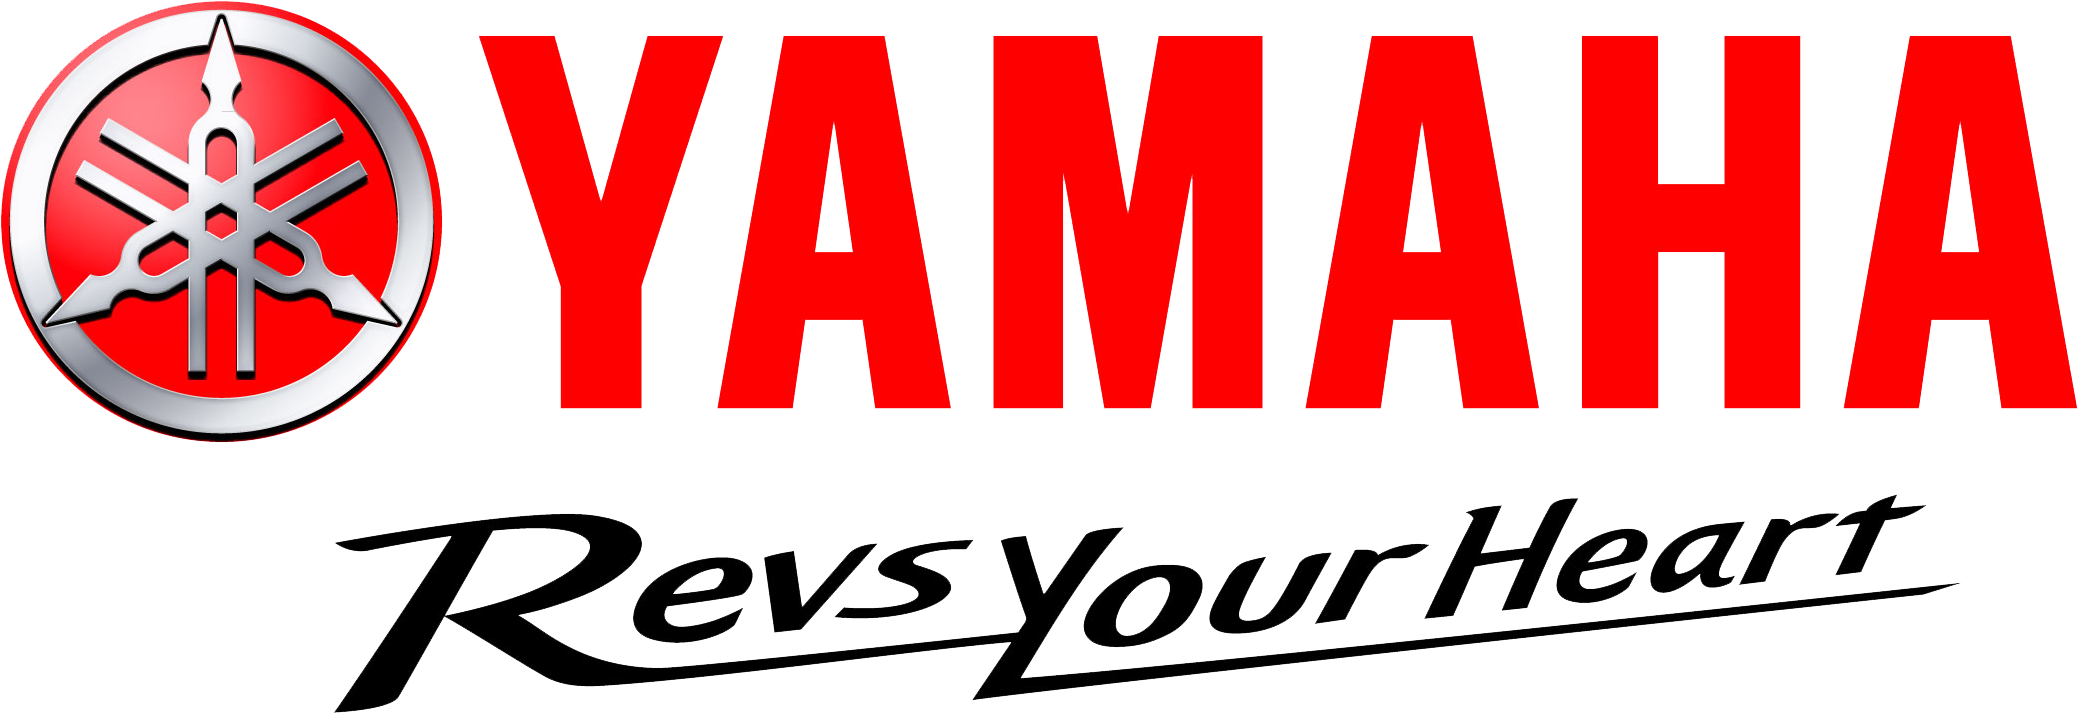 Yamaha Marine